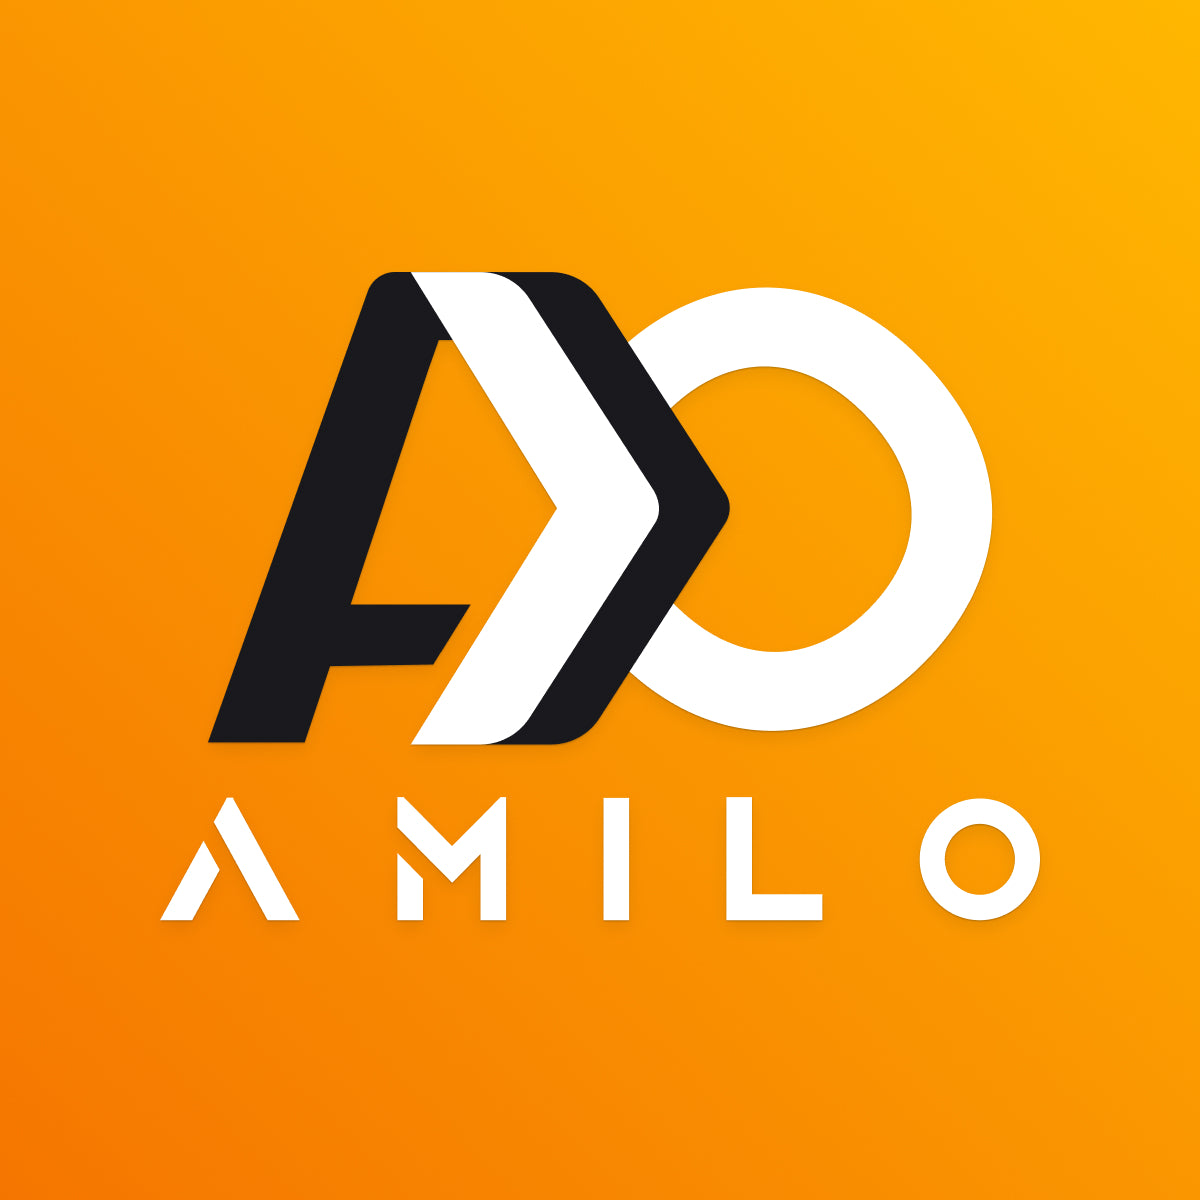 Amilo ‑ Your Logistics Friend